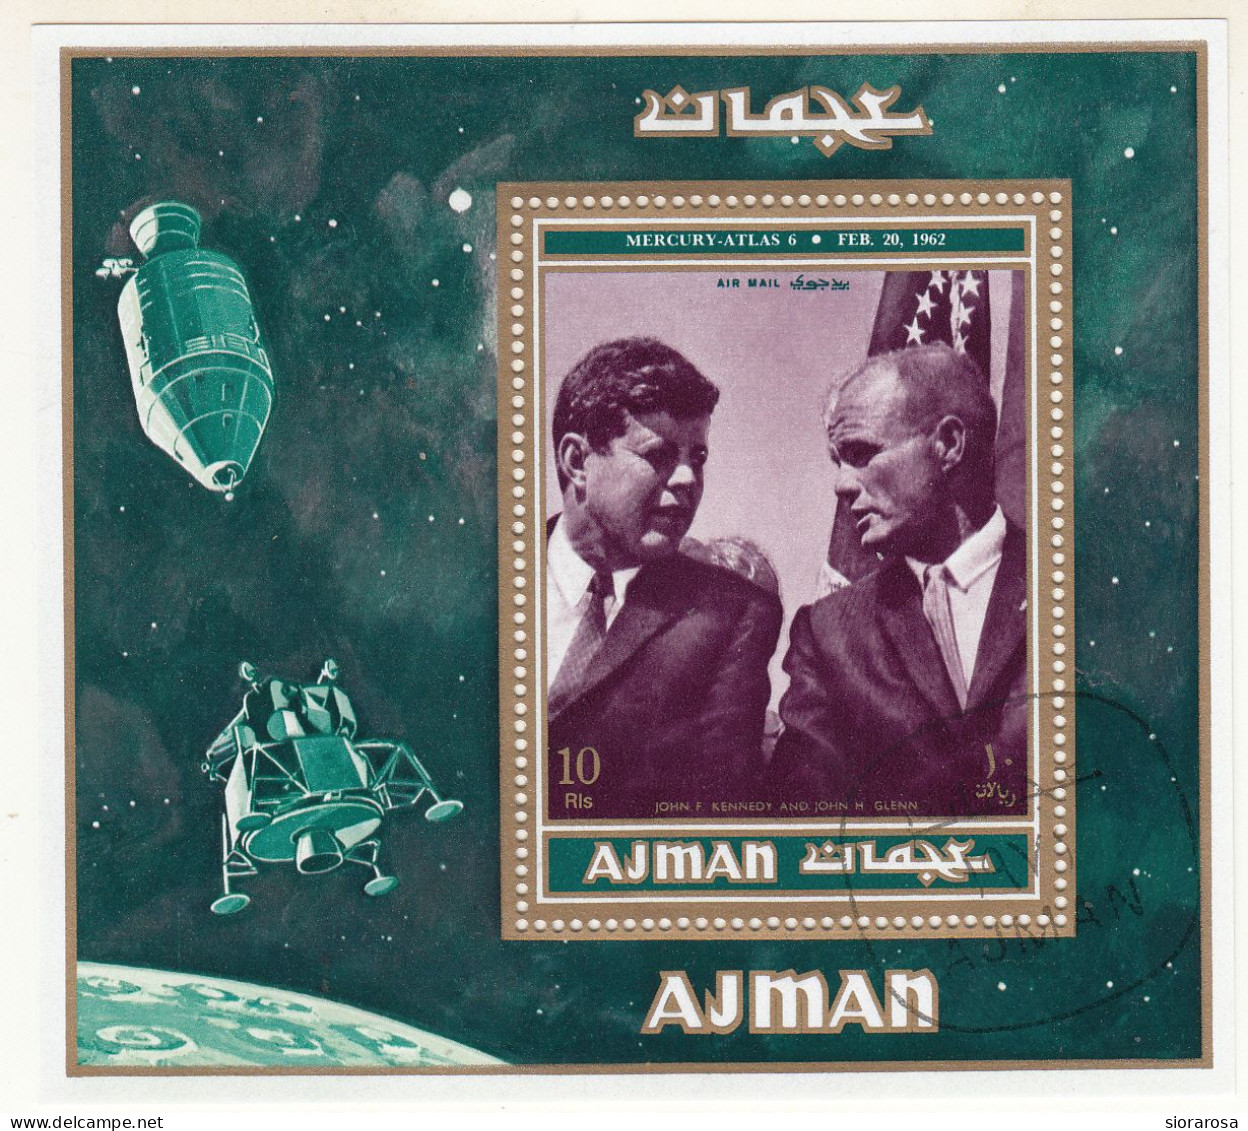 Ajman 1971 Mercury-Atlas 6 -  John F. Kennedy And John H. Glenn - CTO - Asia